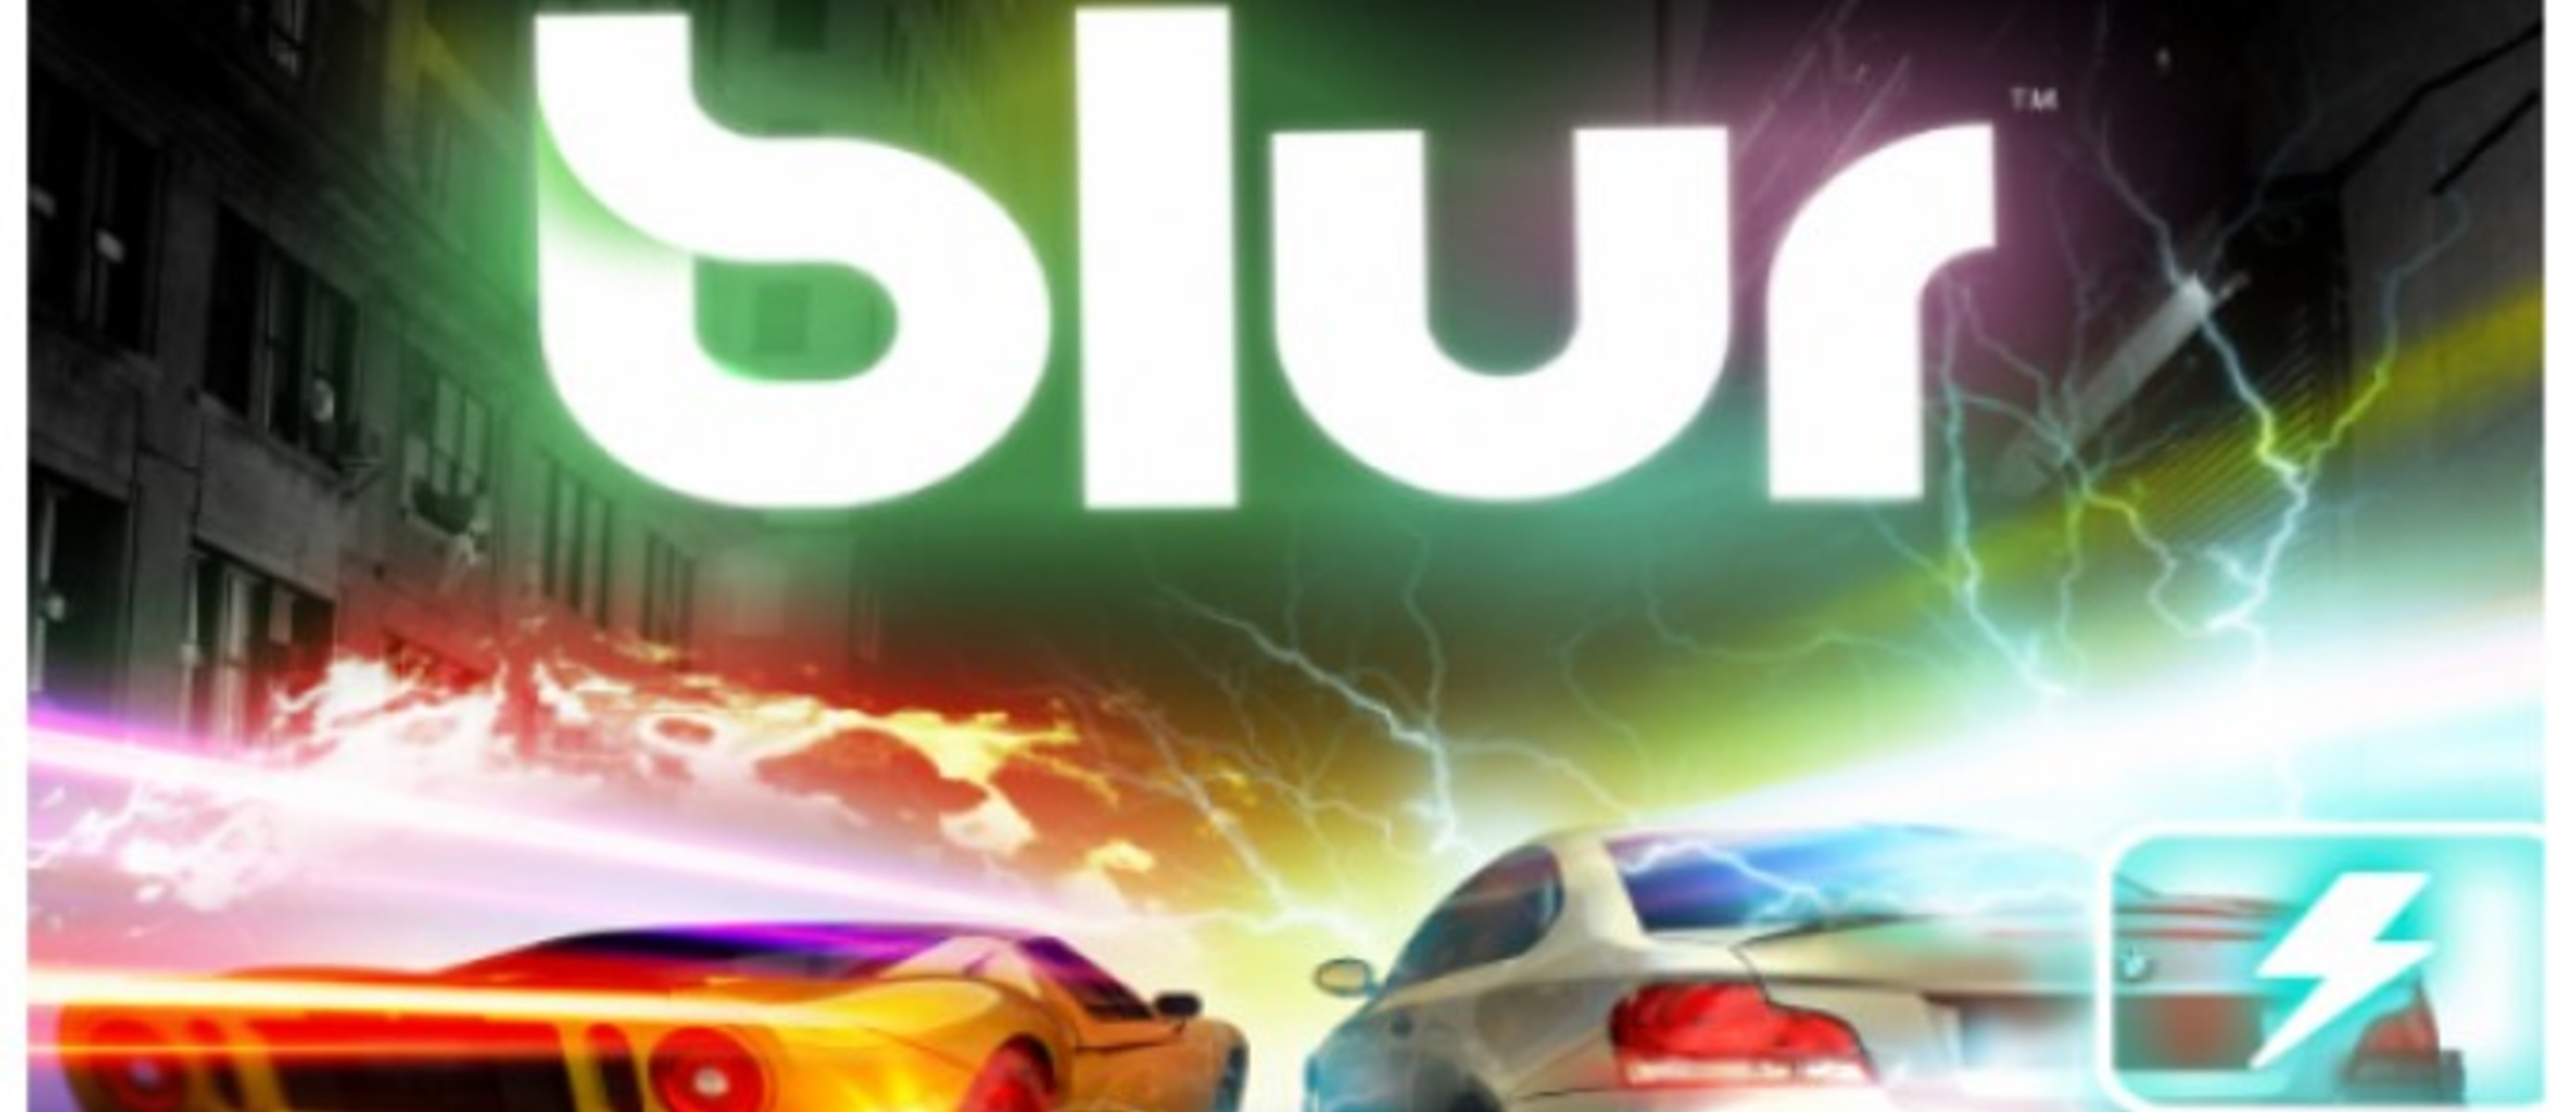 Рекламу игр гонки. Blur Xbox 360. PLAYSTATION 3 игры Blur. Гонки блур ps3. Blur 2 Xbox 360.